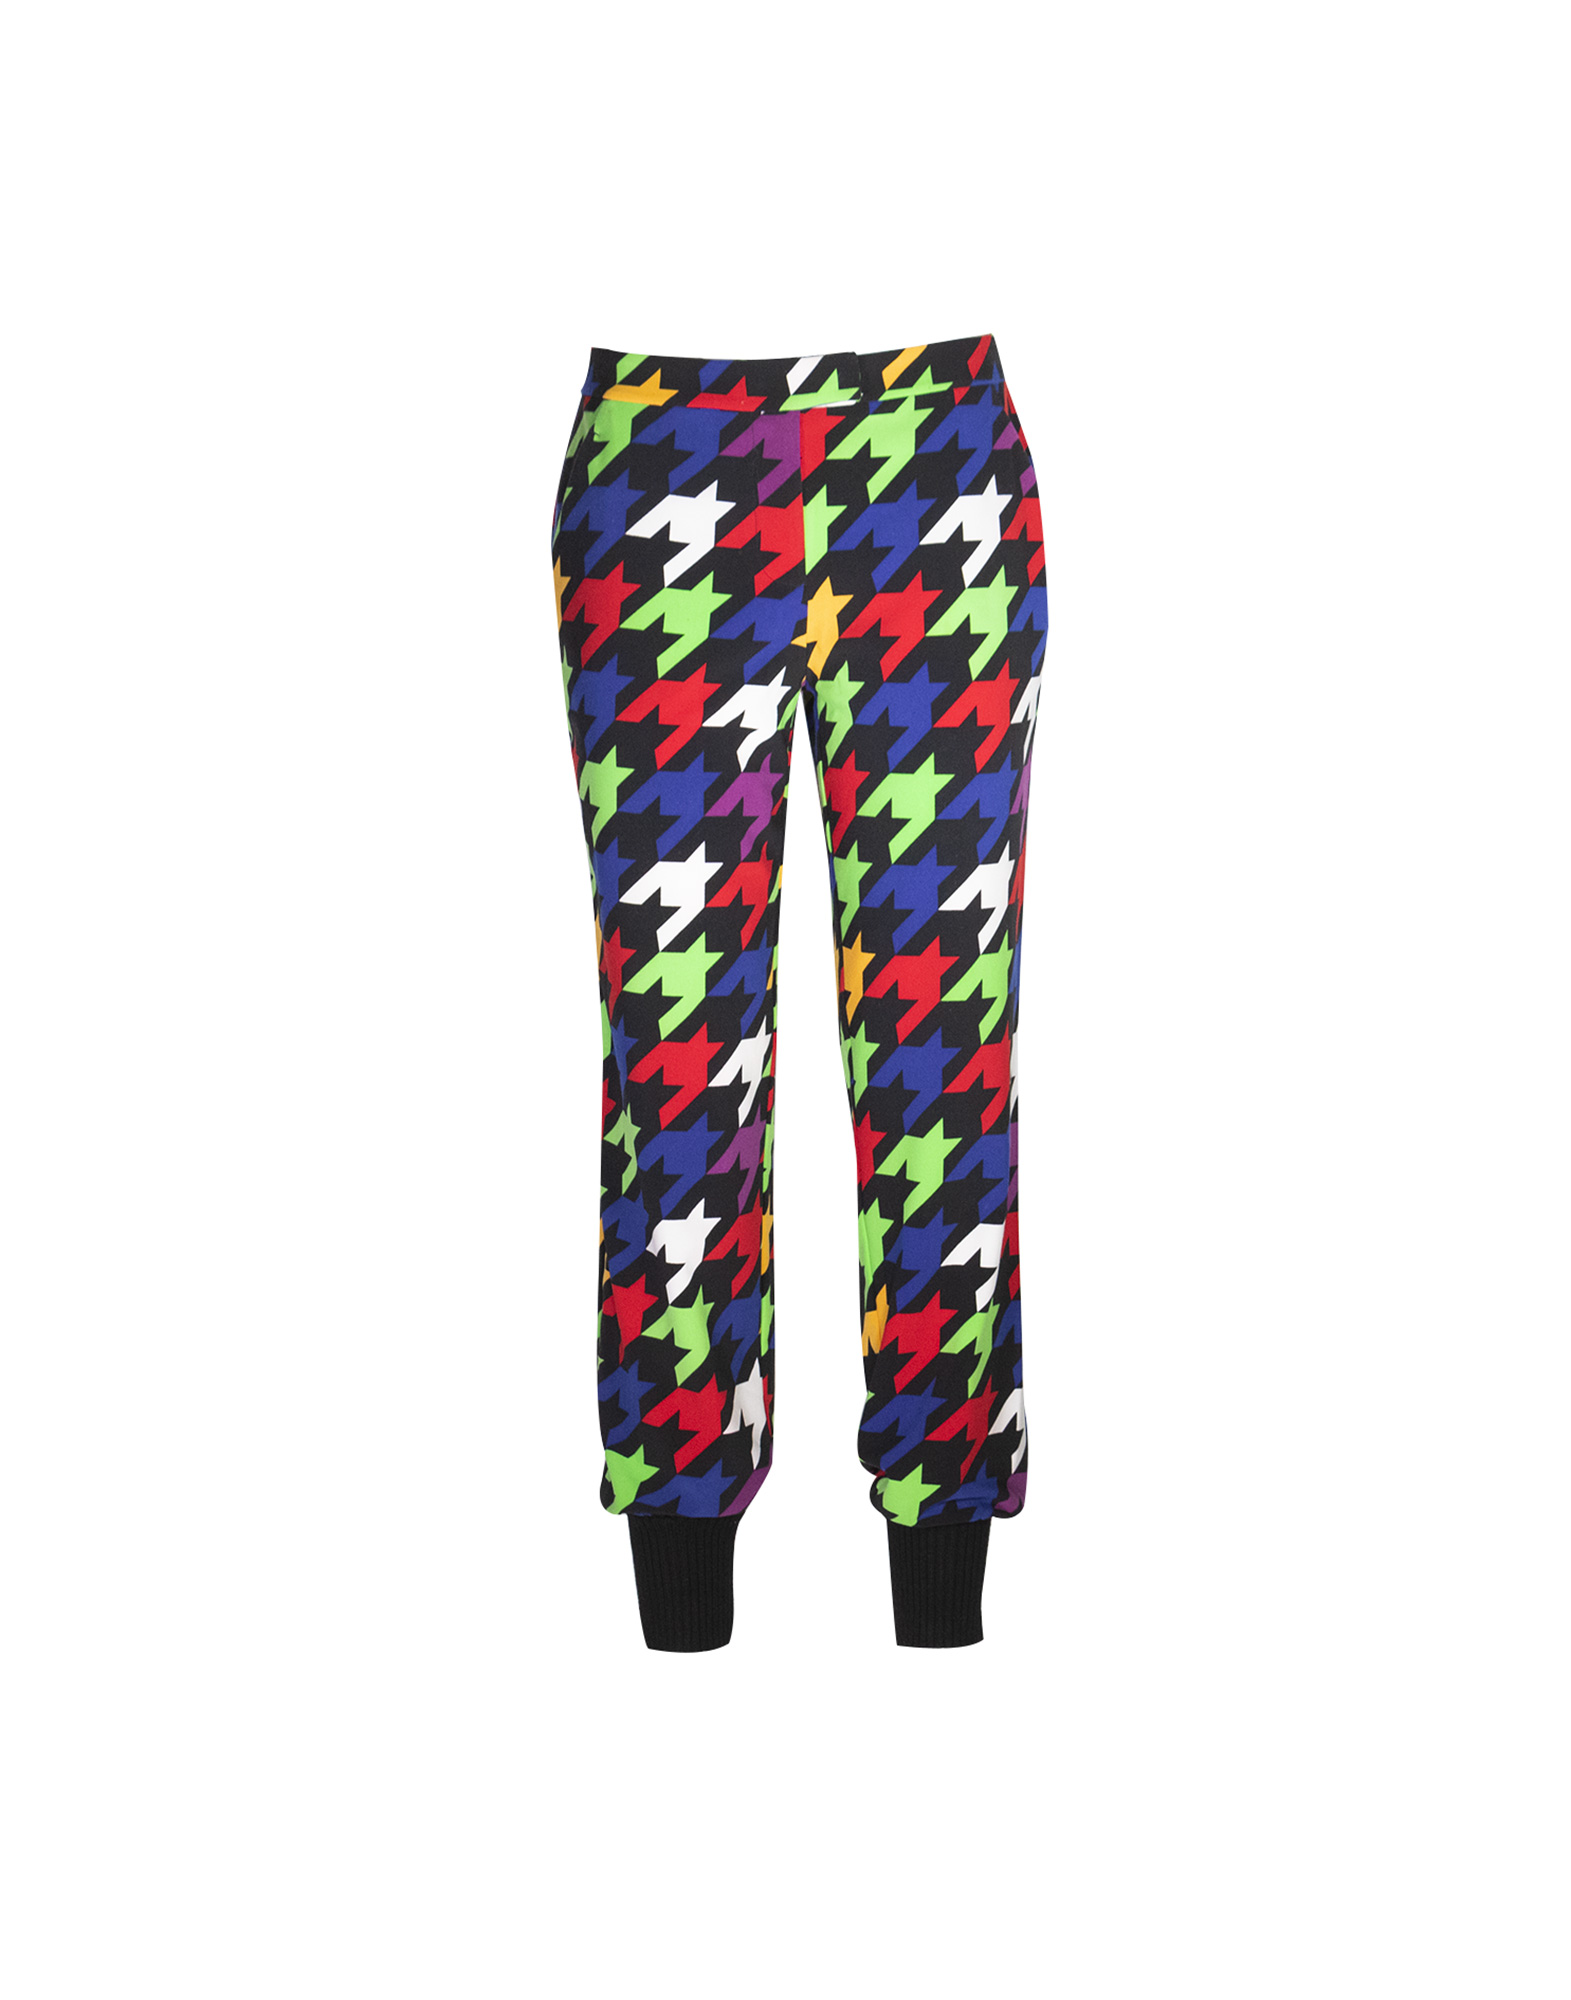 Moschino Boutique - Pied-de-poule patterned trousers